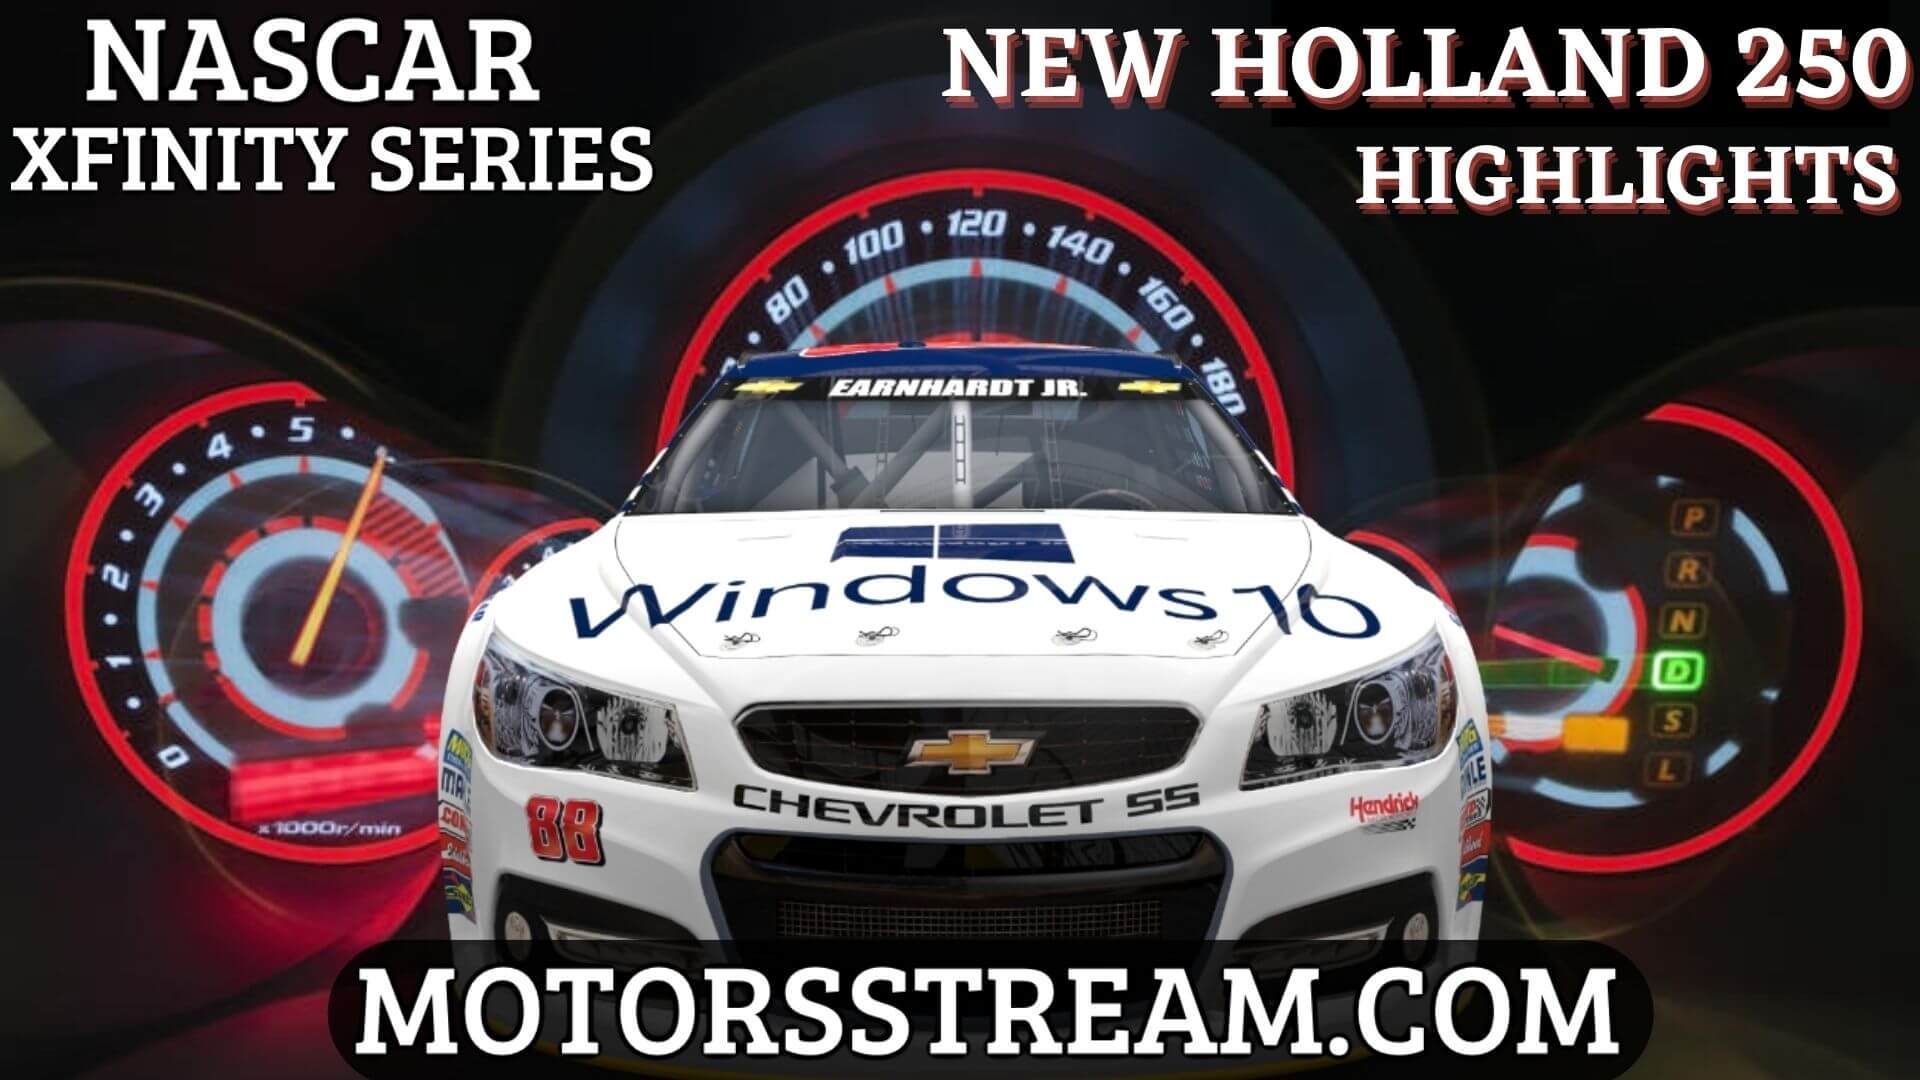 NASCAR New Holland 250 Highlights 2021 Xfinity Series